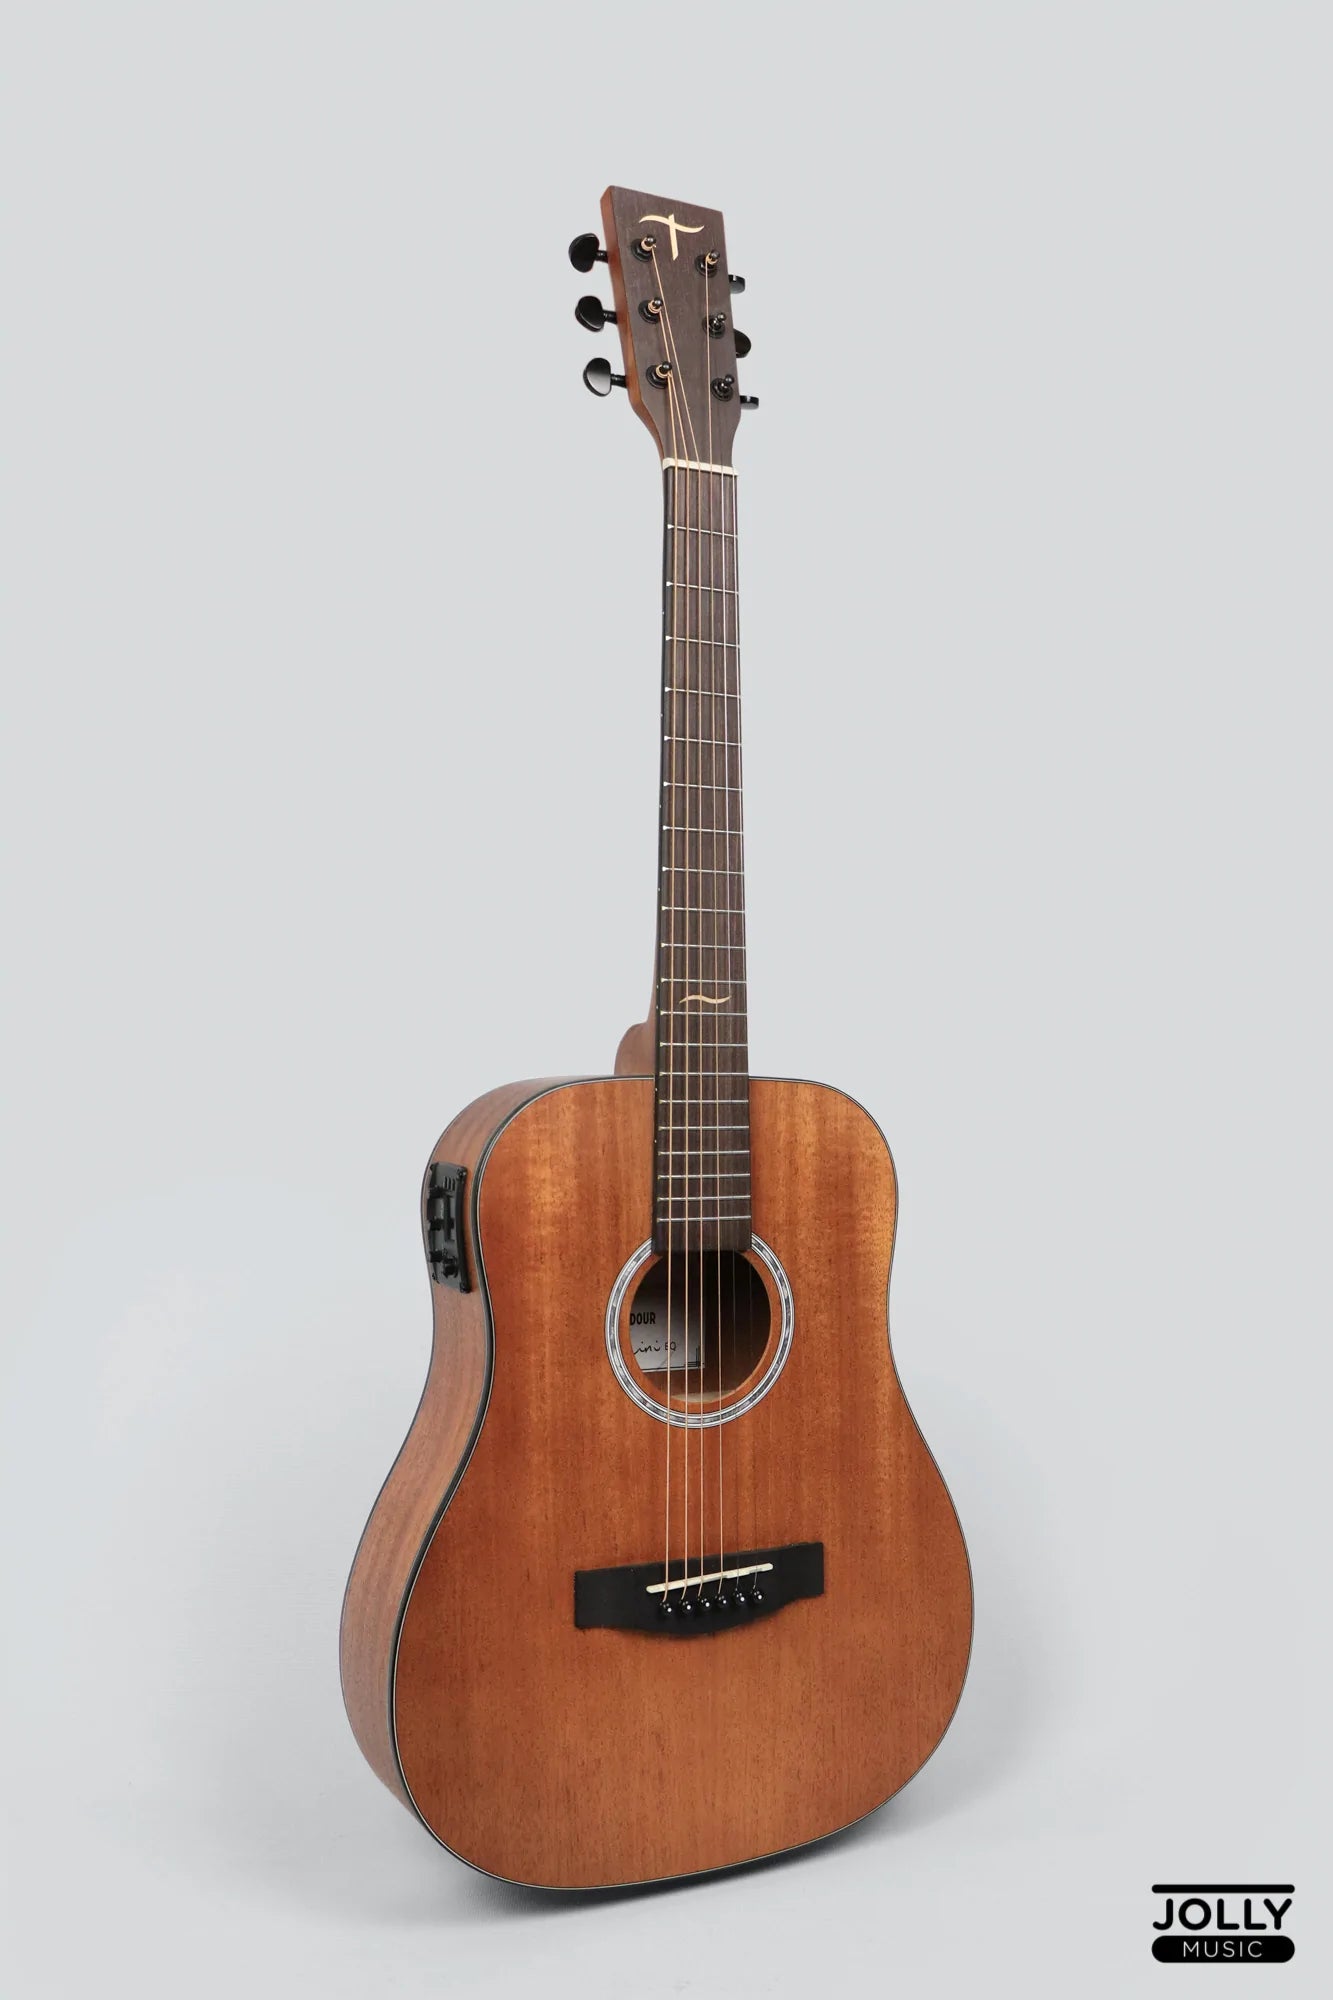 JCraft Troubadour Taka Mini EQ Little Dread All-Mahogany 36" Acoustic Guitar with Pickups and bag